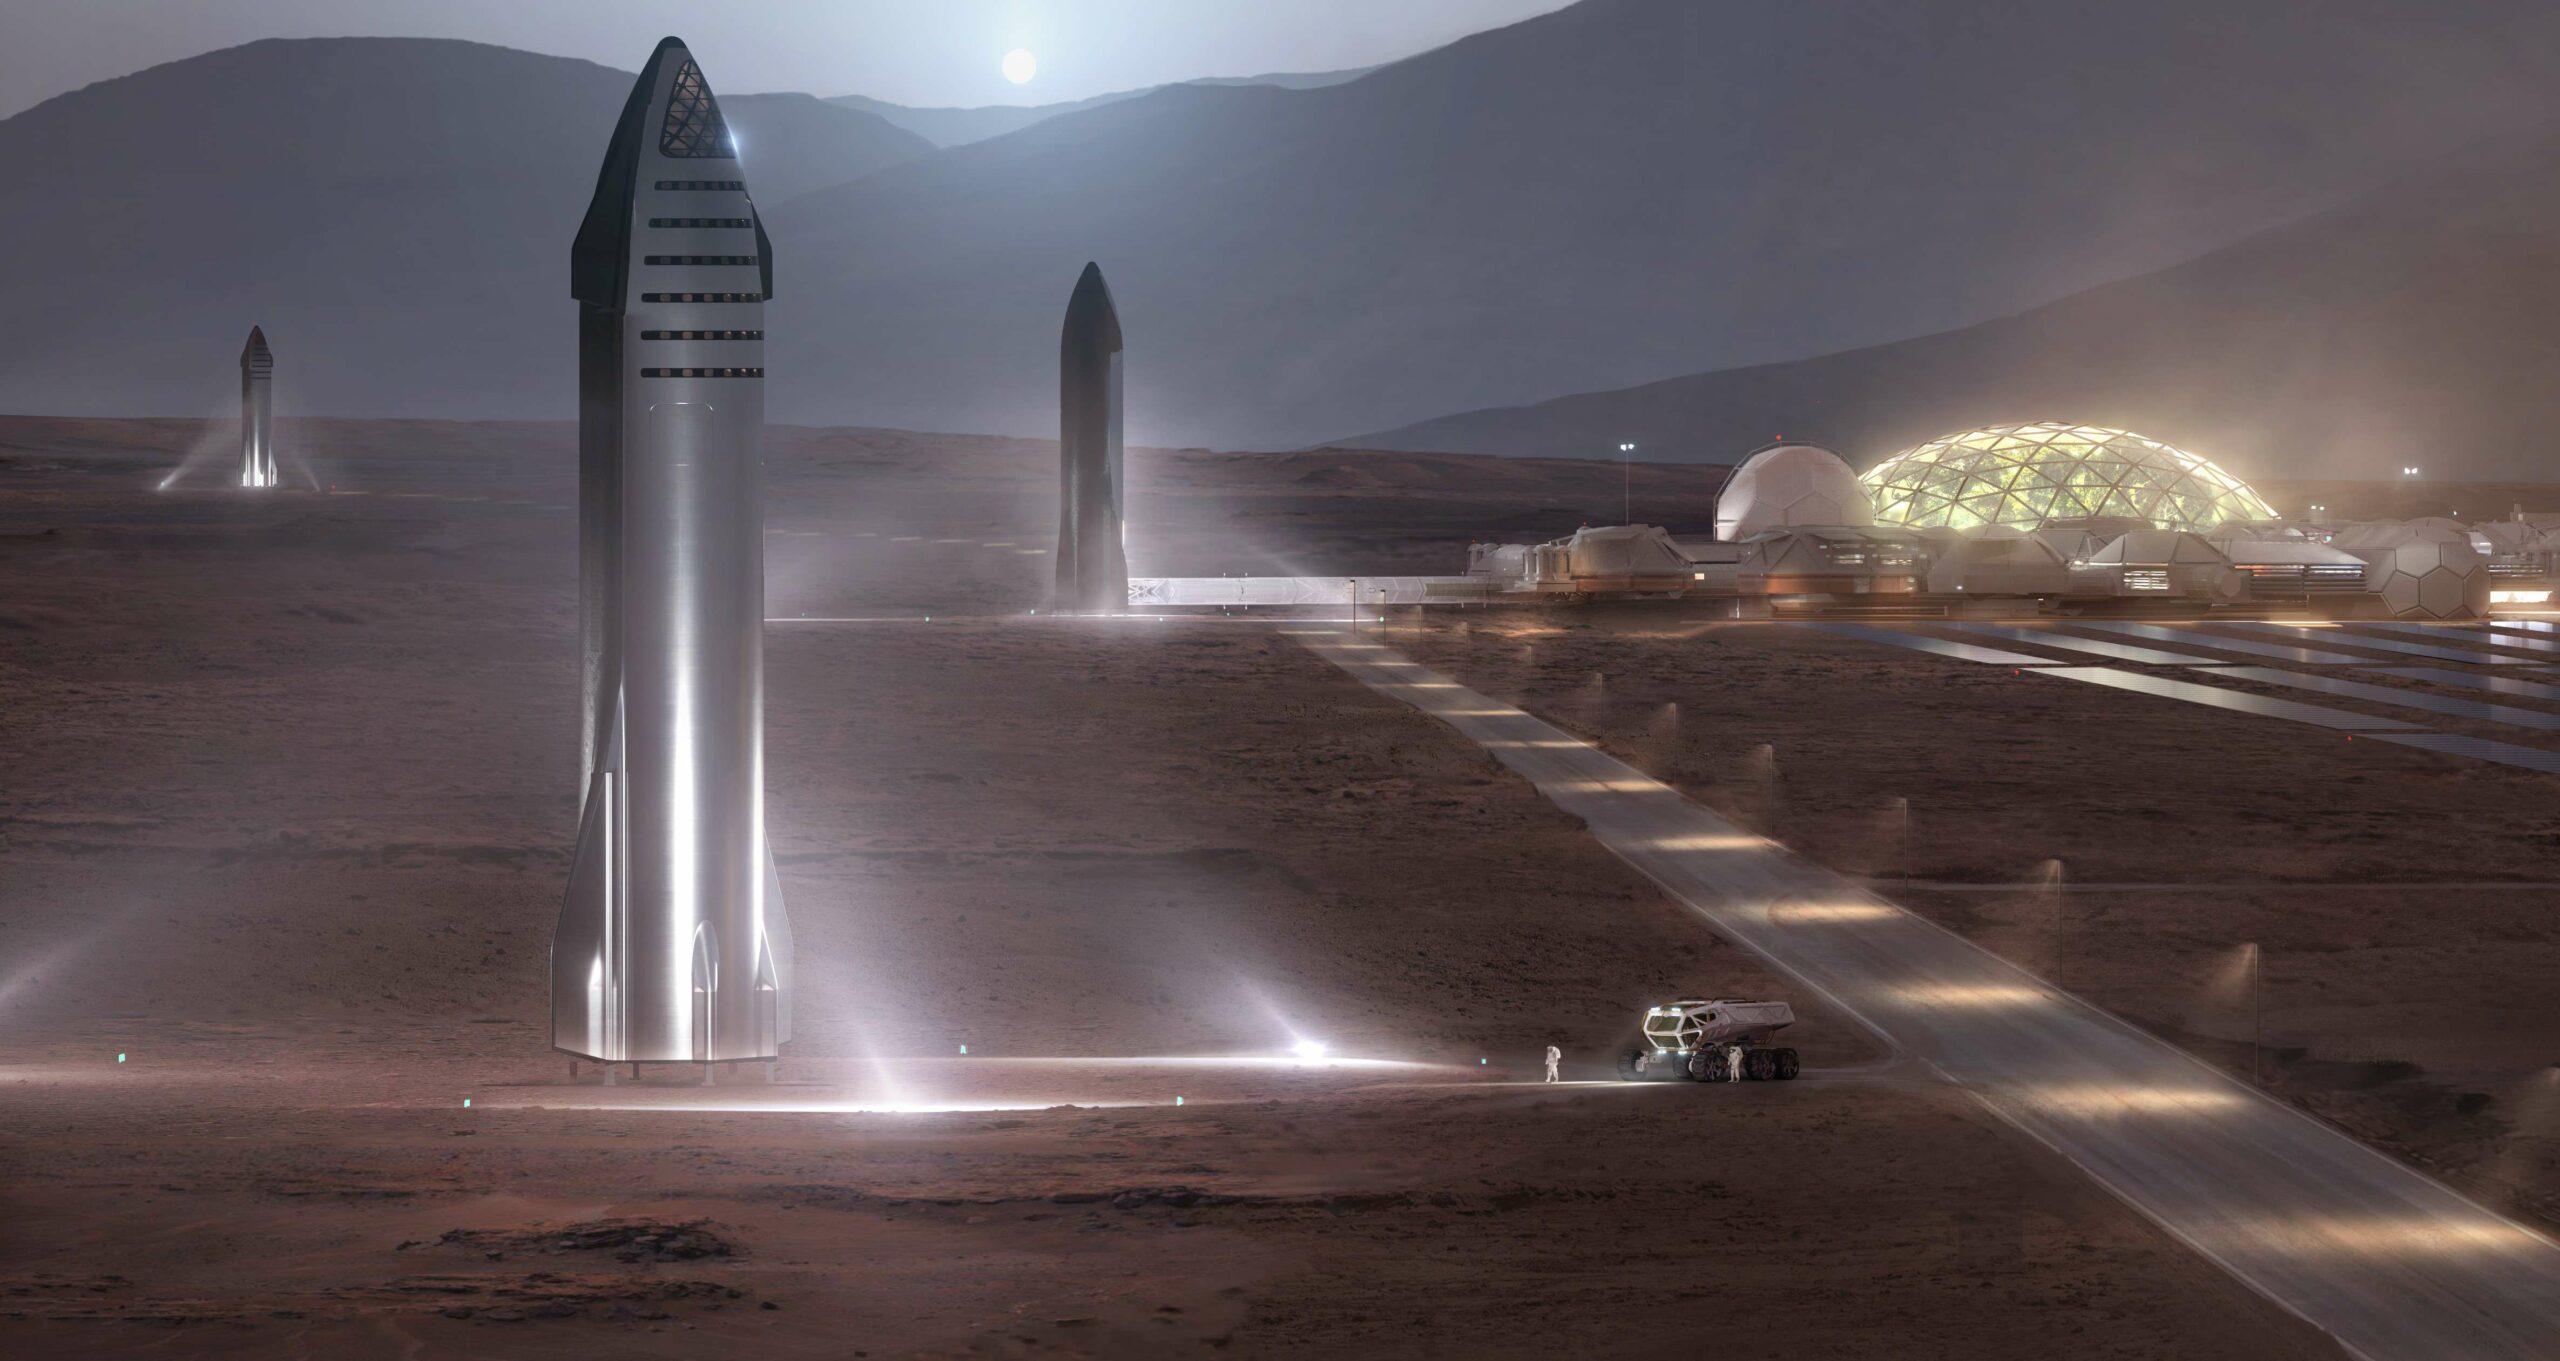 Starship 2019 Mars Base Render SpaceX 1 Full Crop C Scaled 